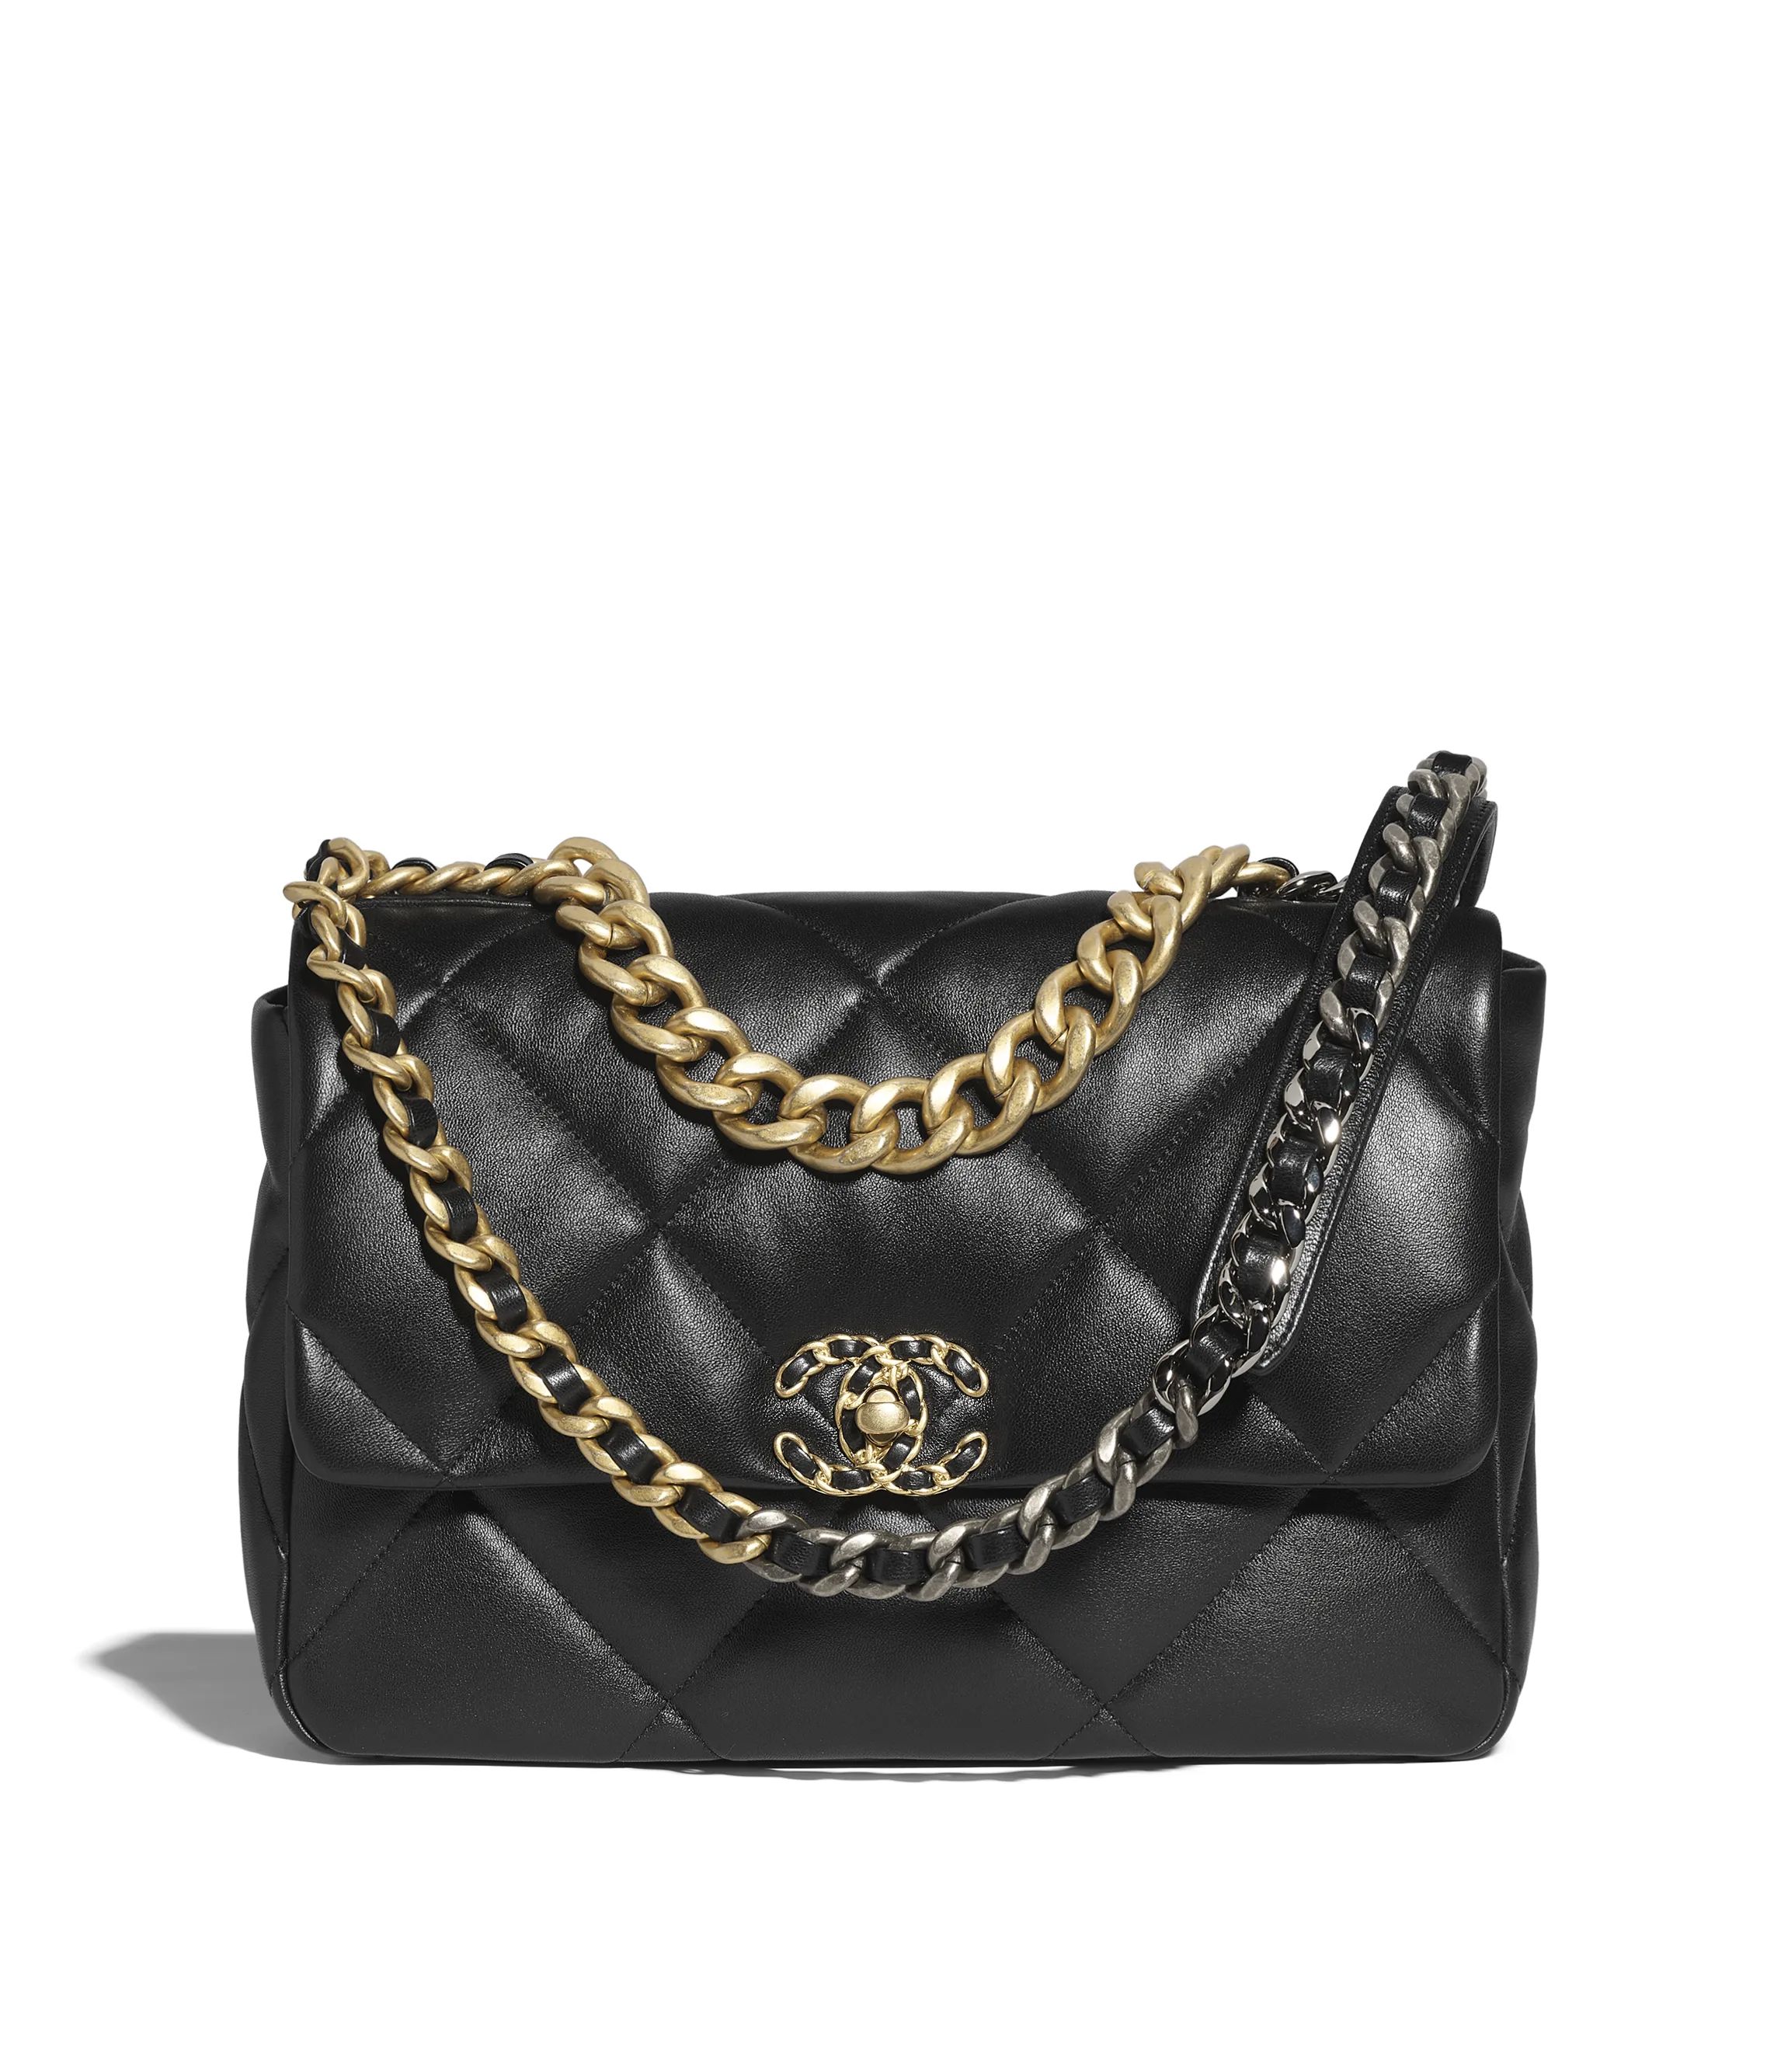 CHANEL 19 Large Handbag | Chanel, Inc. (US)